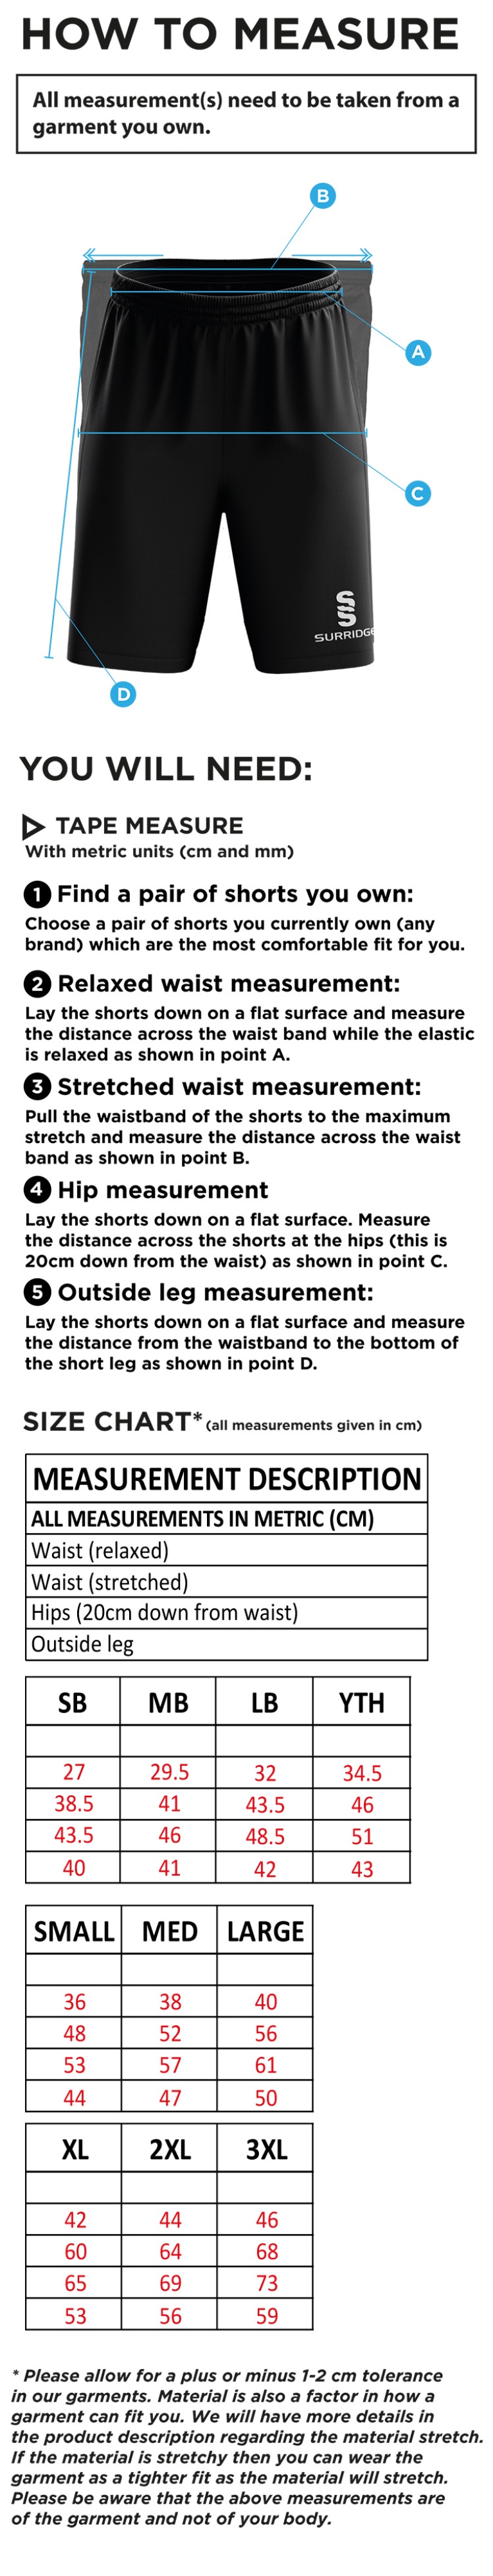 Cornwood CC - Blade Short - Size Guide